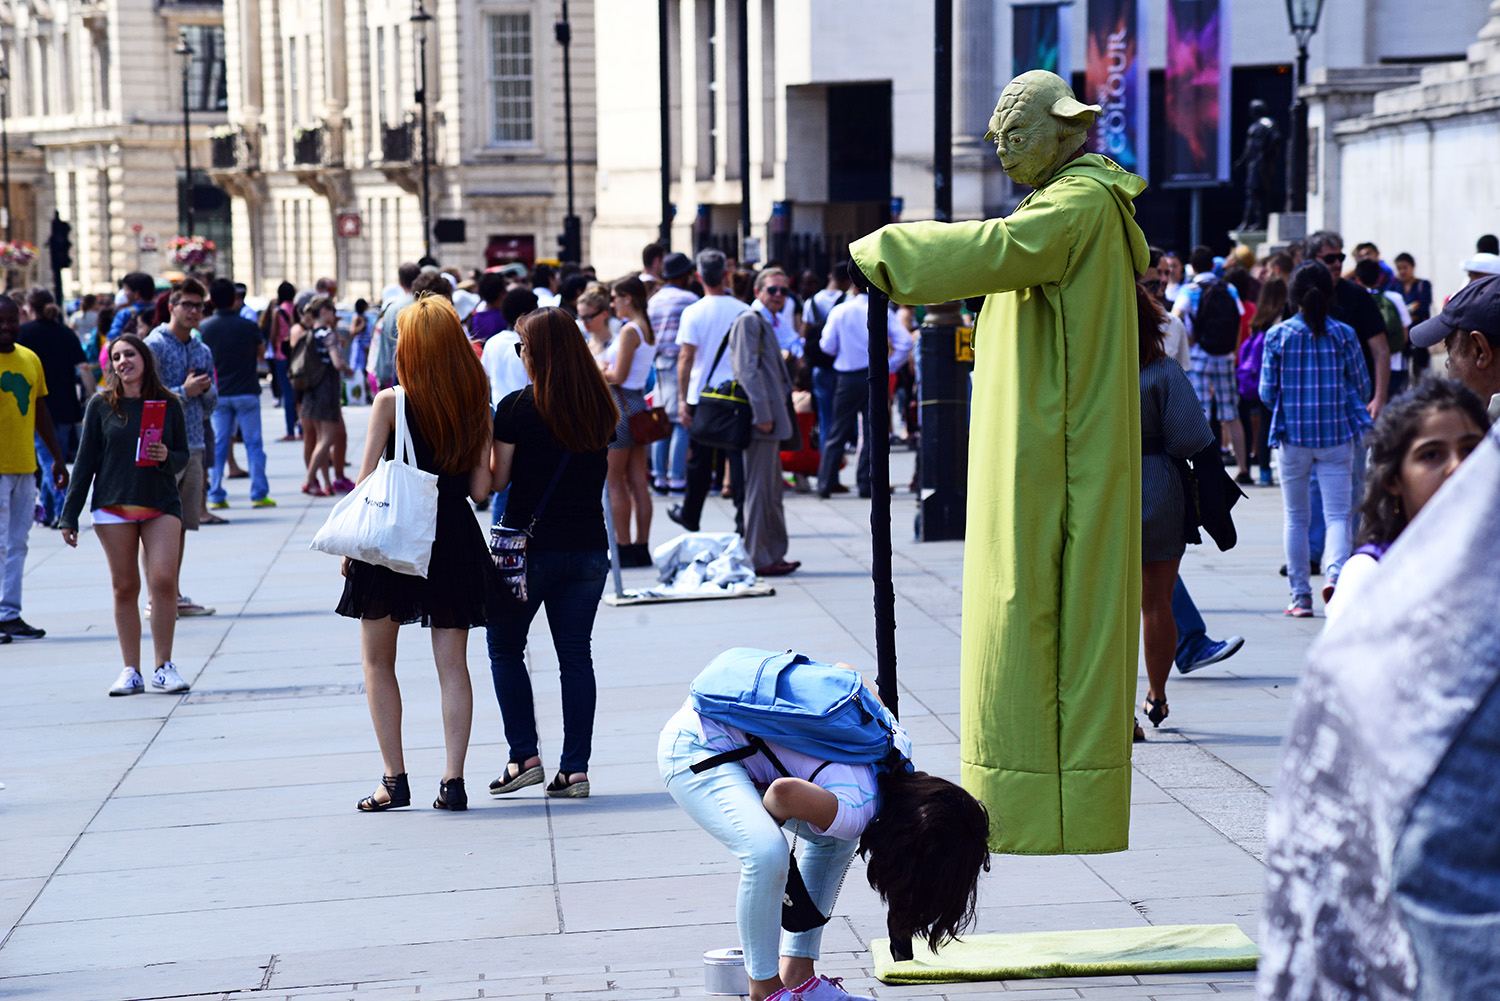 Yoda_Street_Performer_Performance_Tourists_Humor_Picadilly_Circus_London.jpg